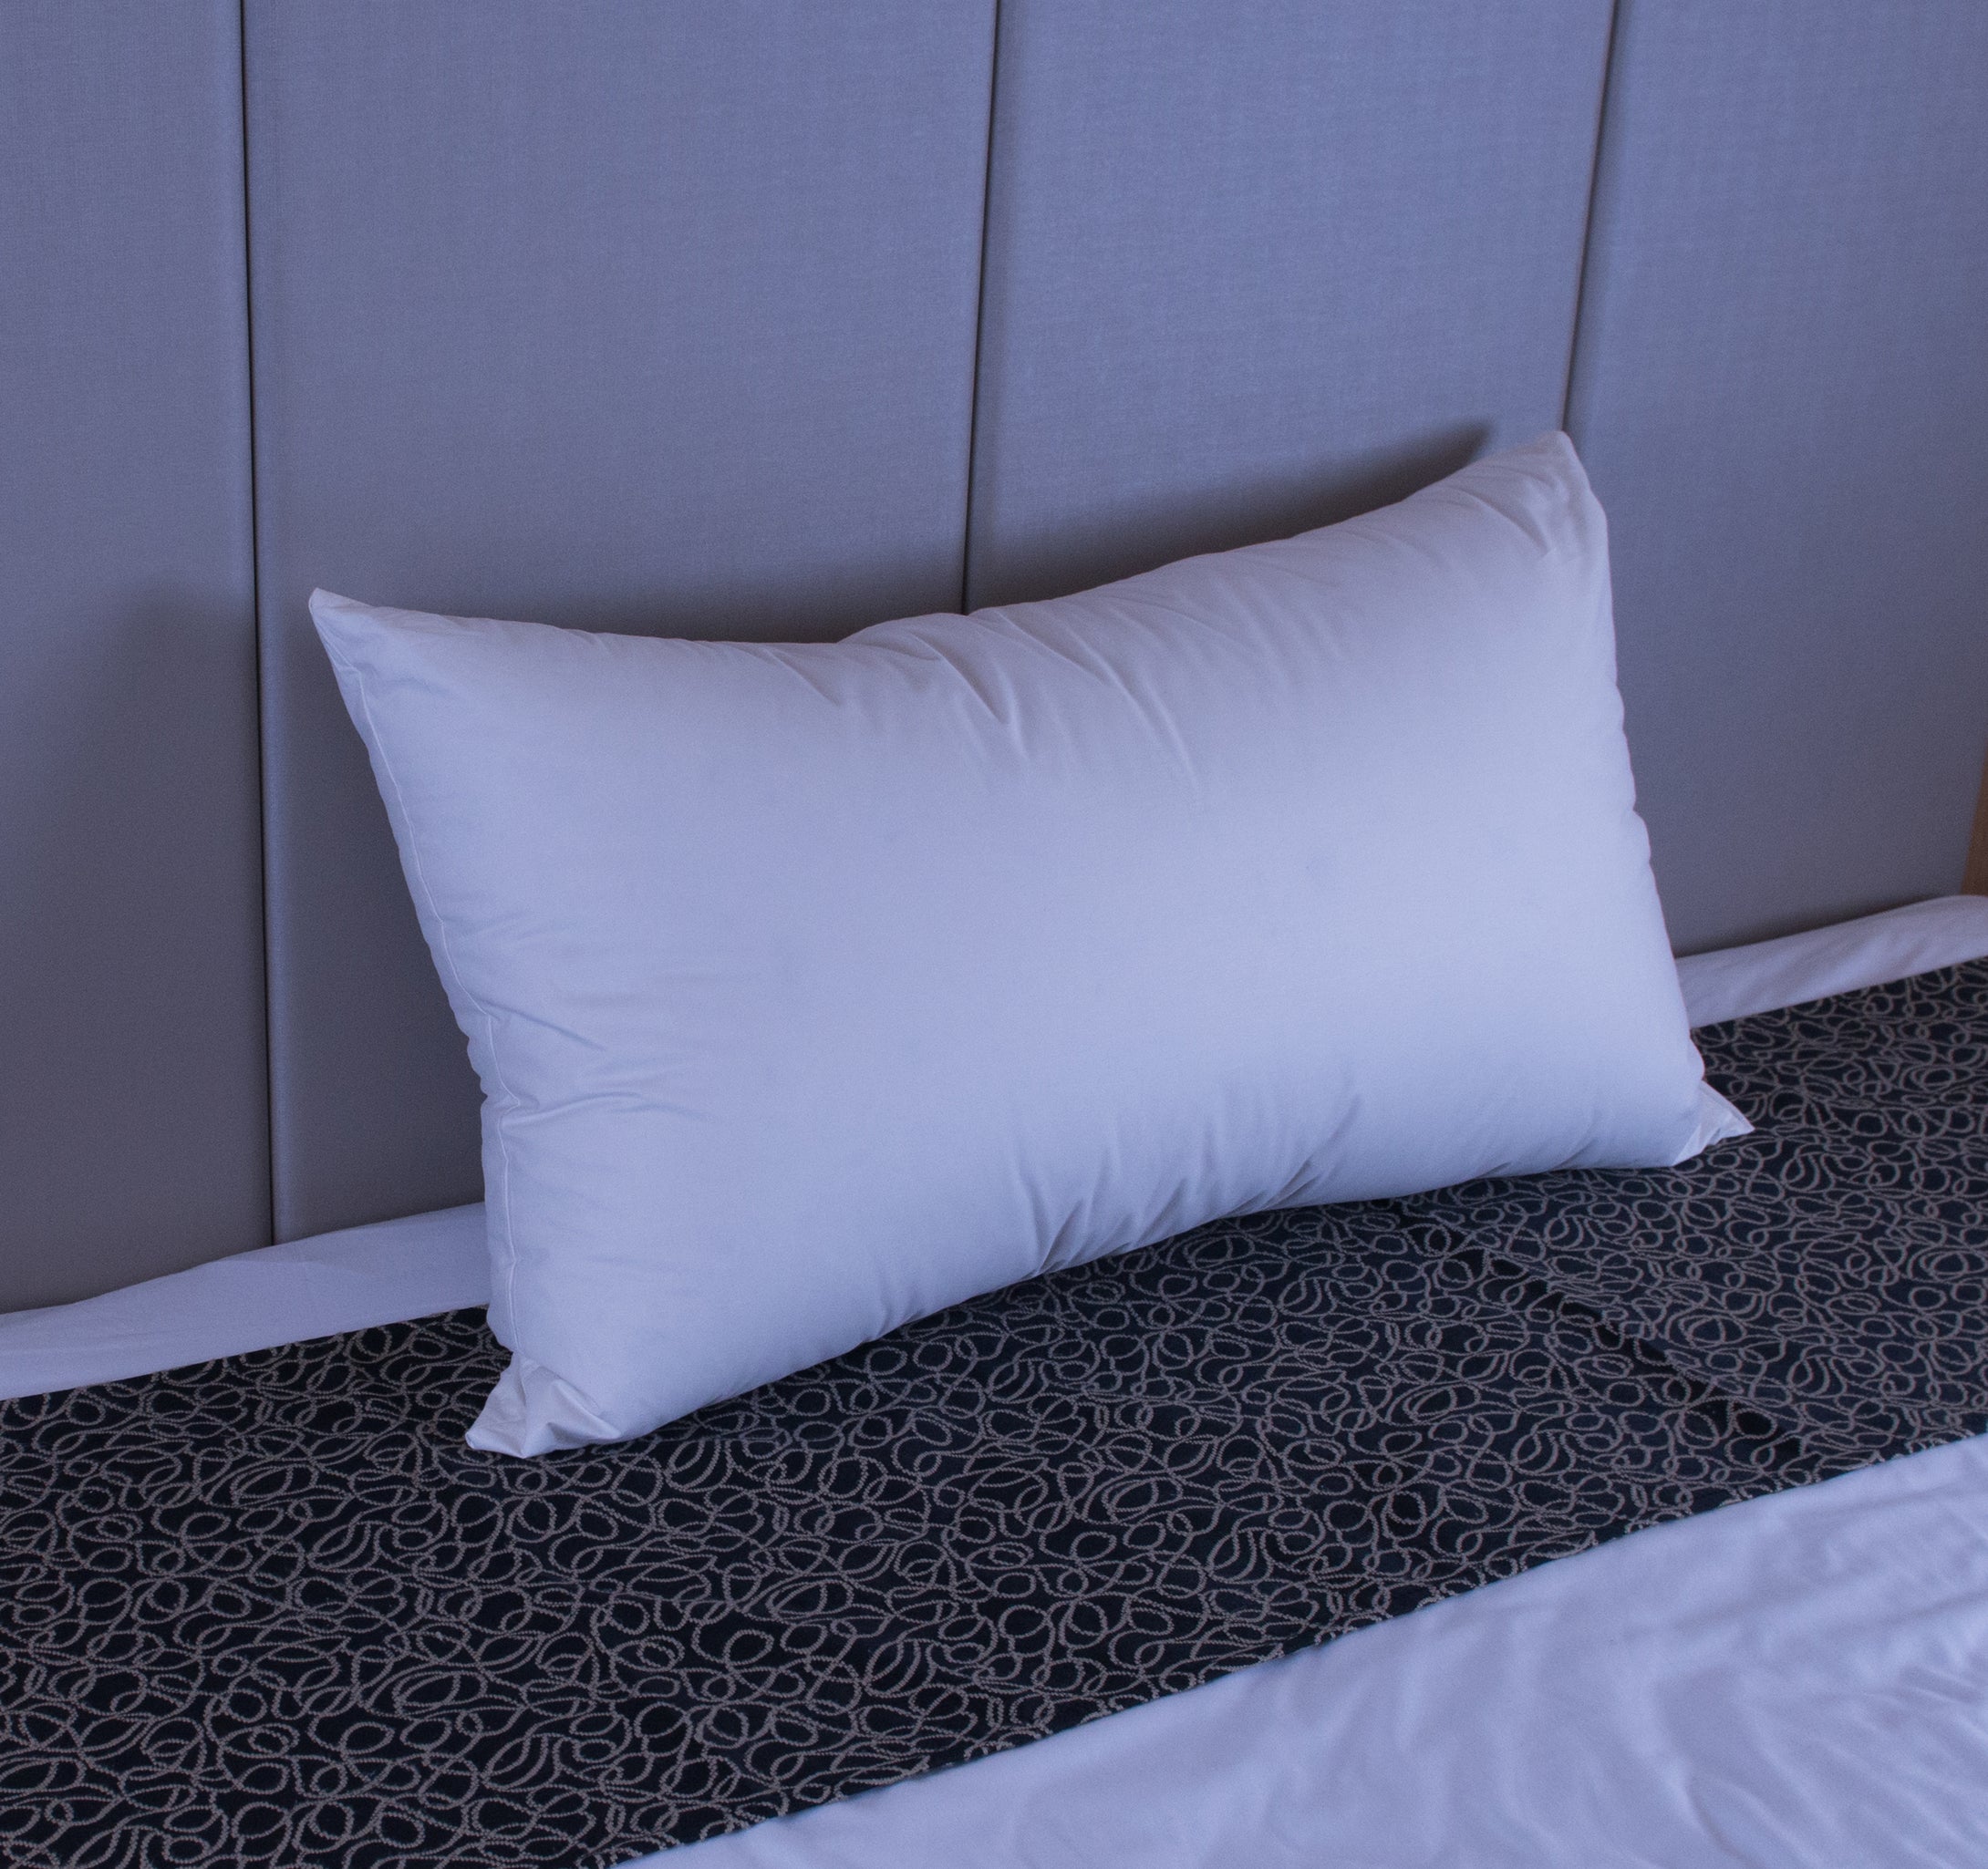 Standard Low/Soft Profile Pillows